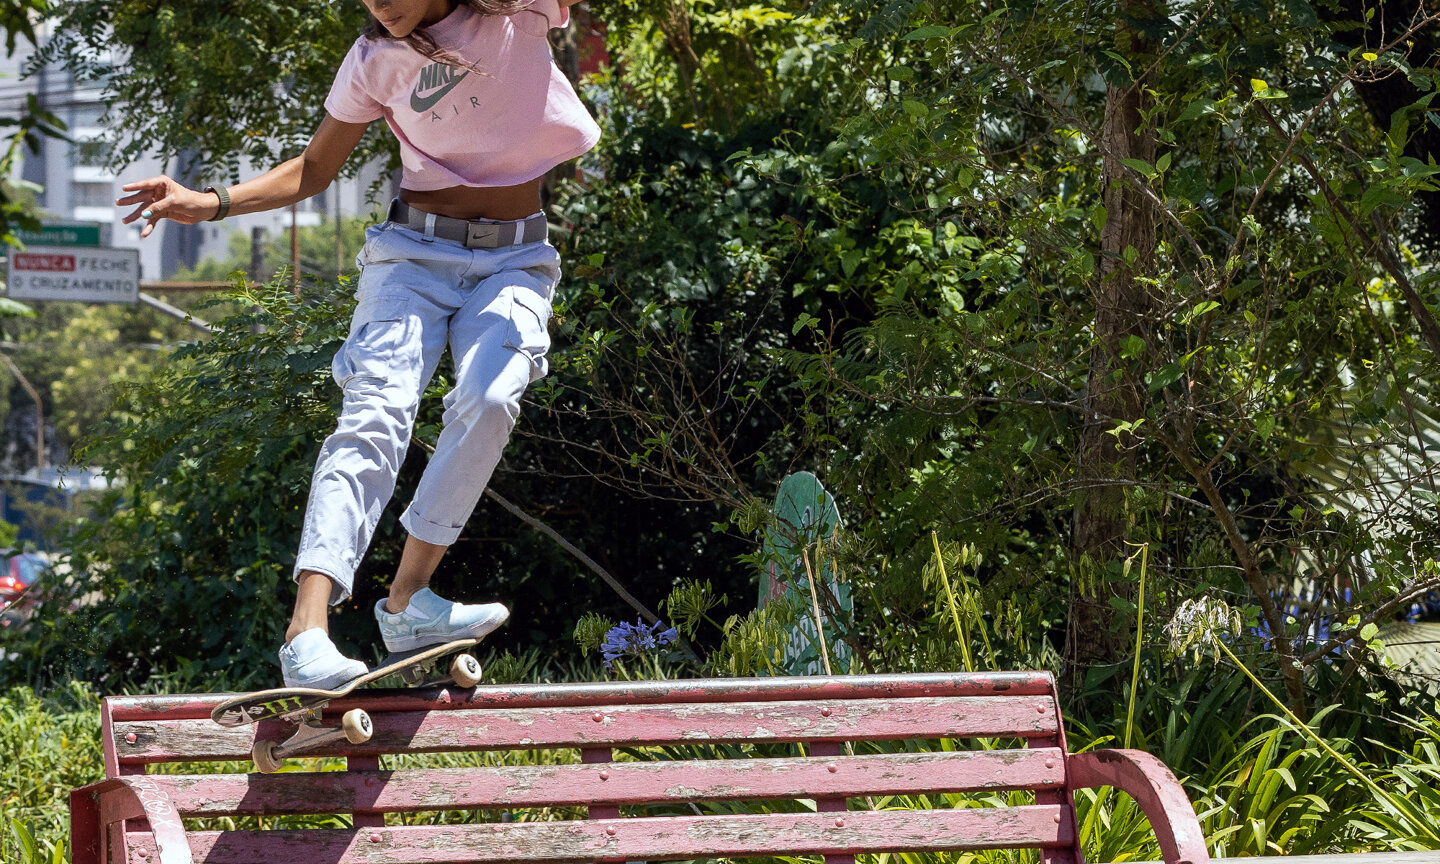 dunk skateboard | Nike Skateboarding